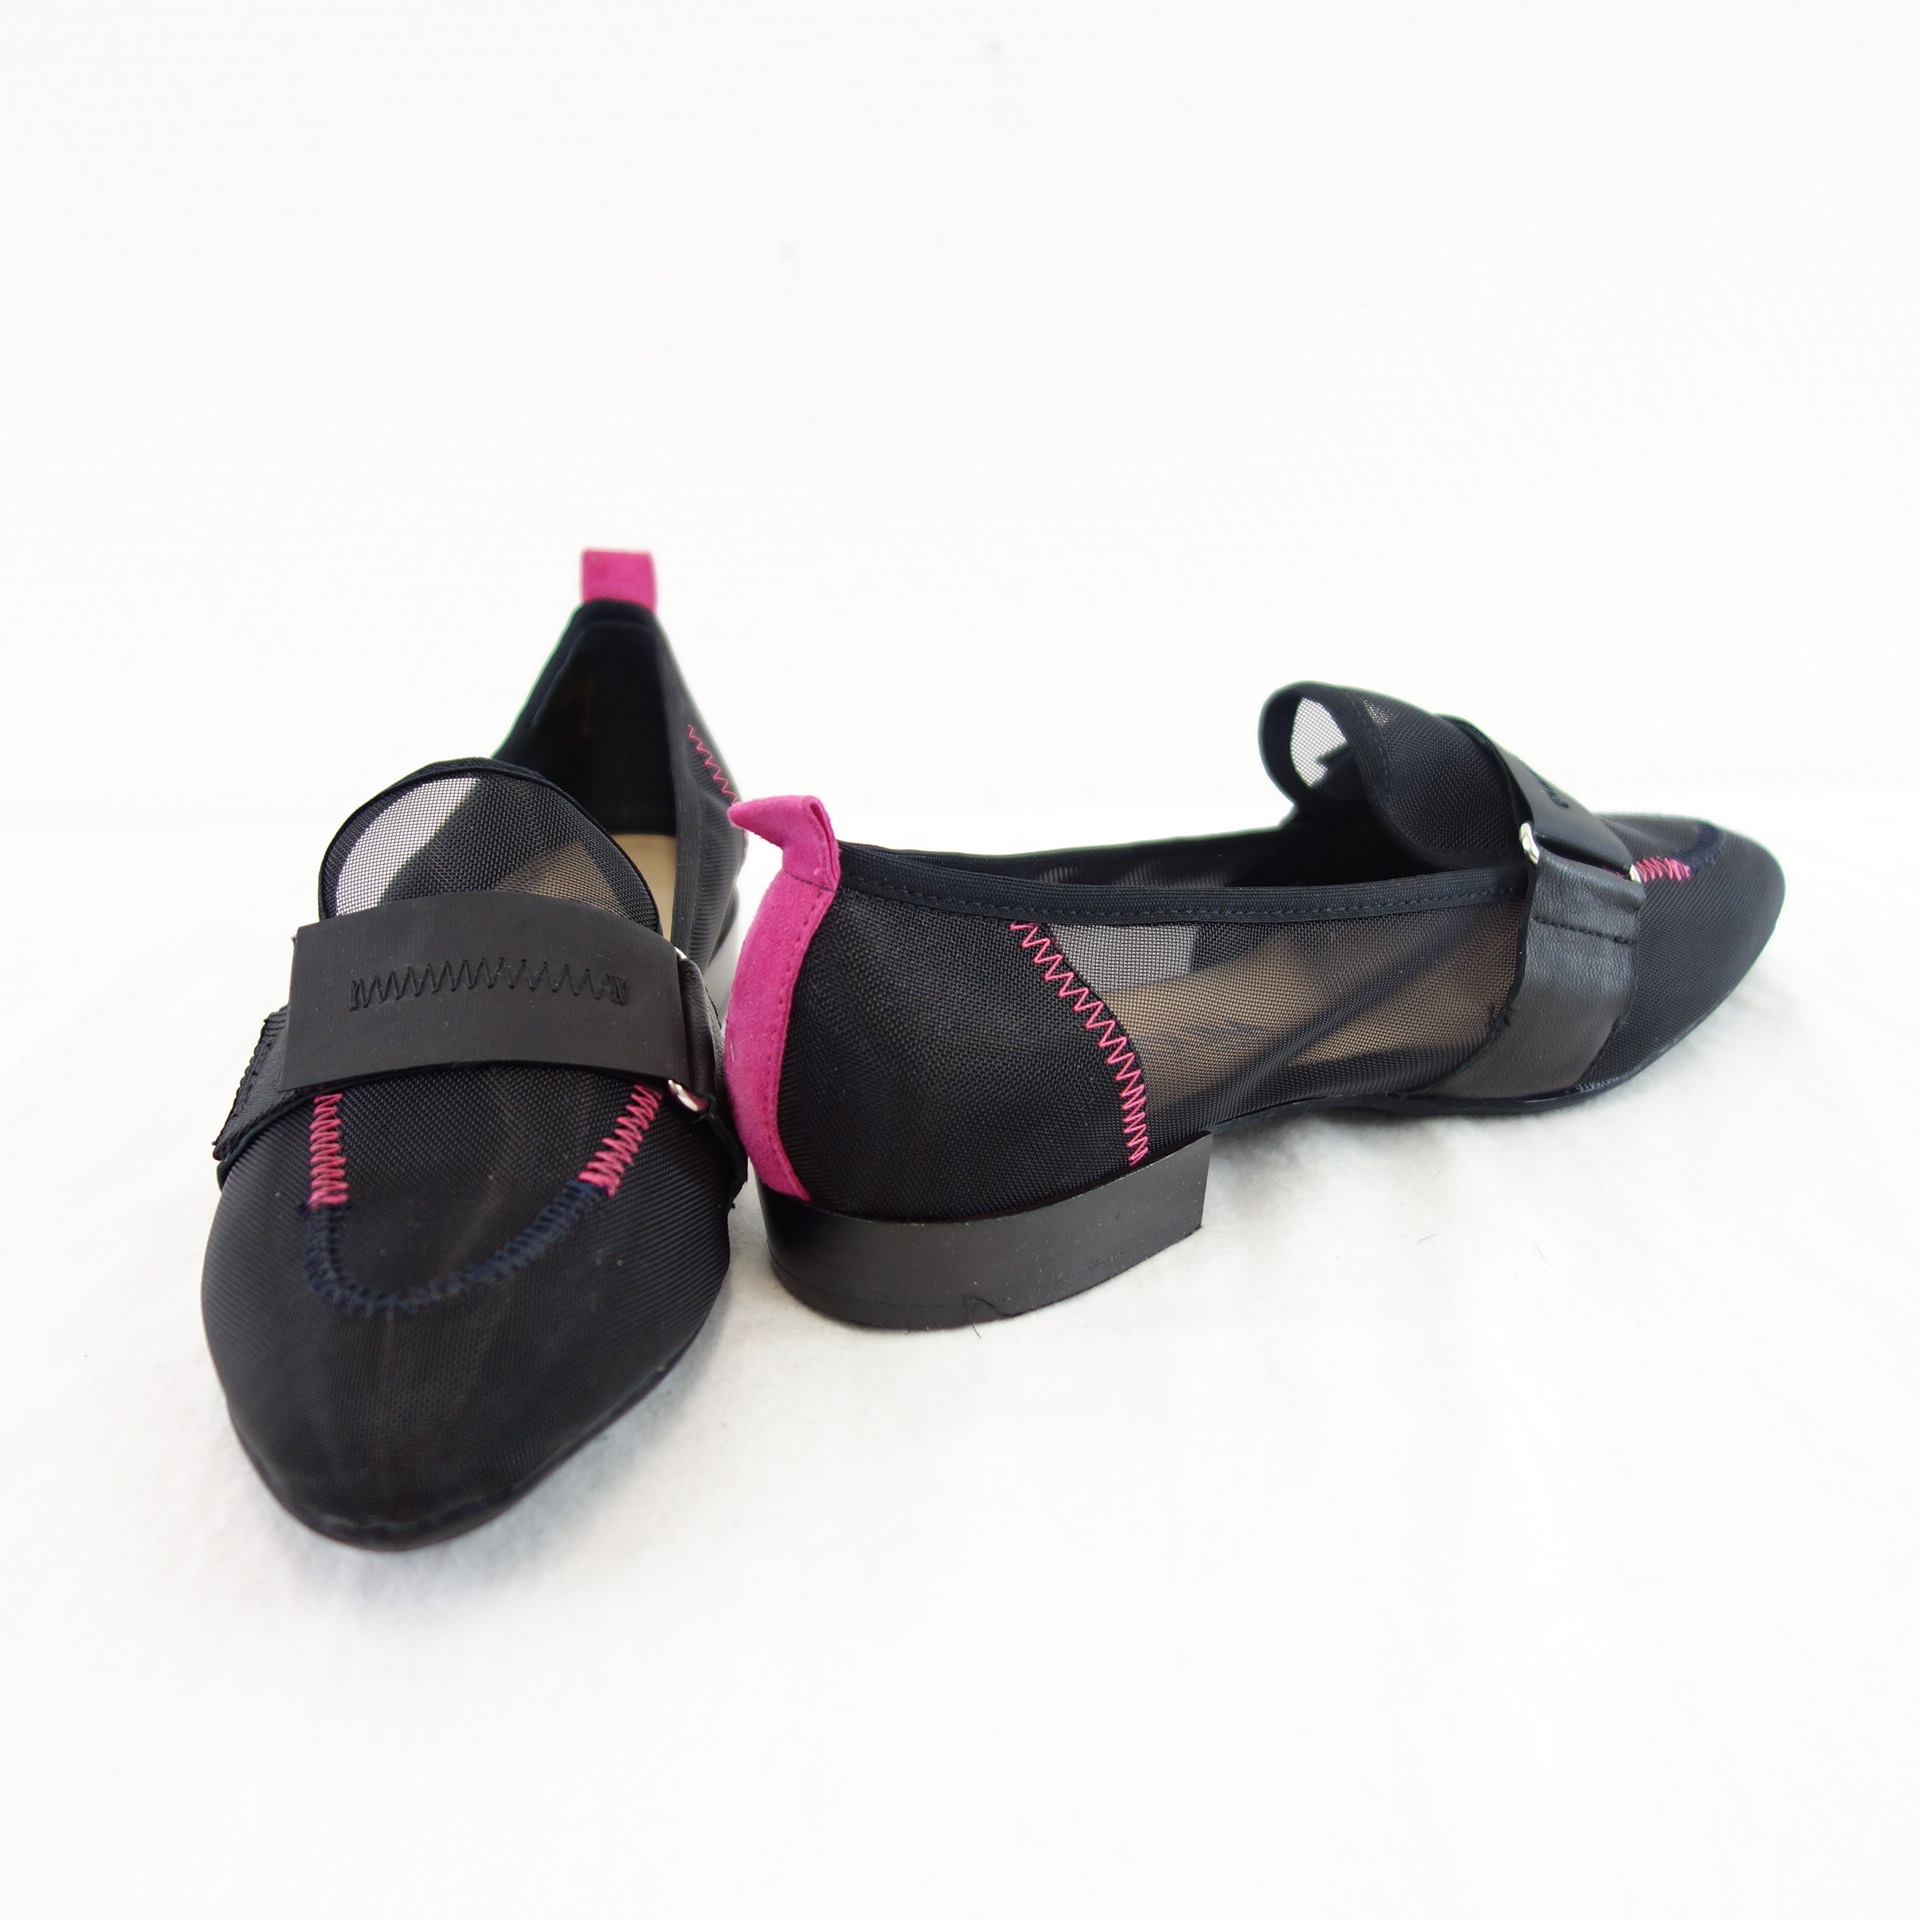 DONNA CAROLINA Damen Schuhe Slipper Mokassins Loafer Ballerinas Schwarz Pink 